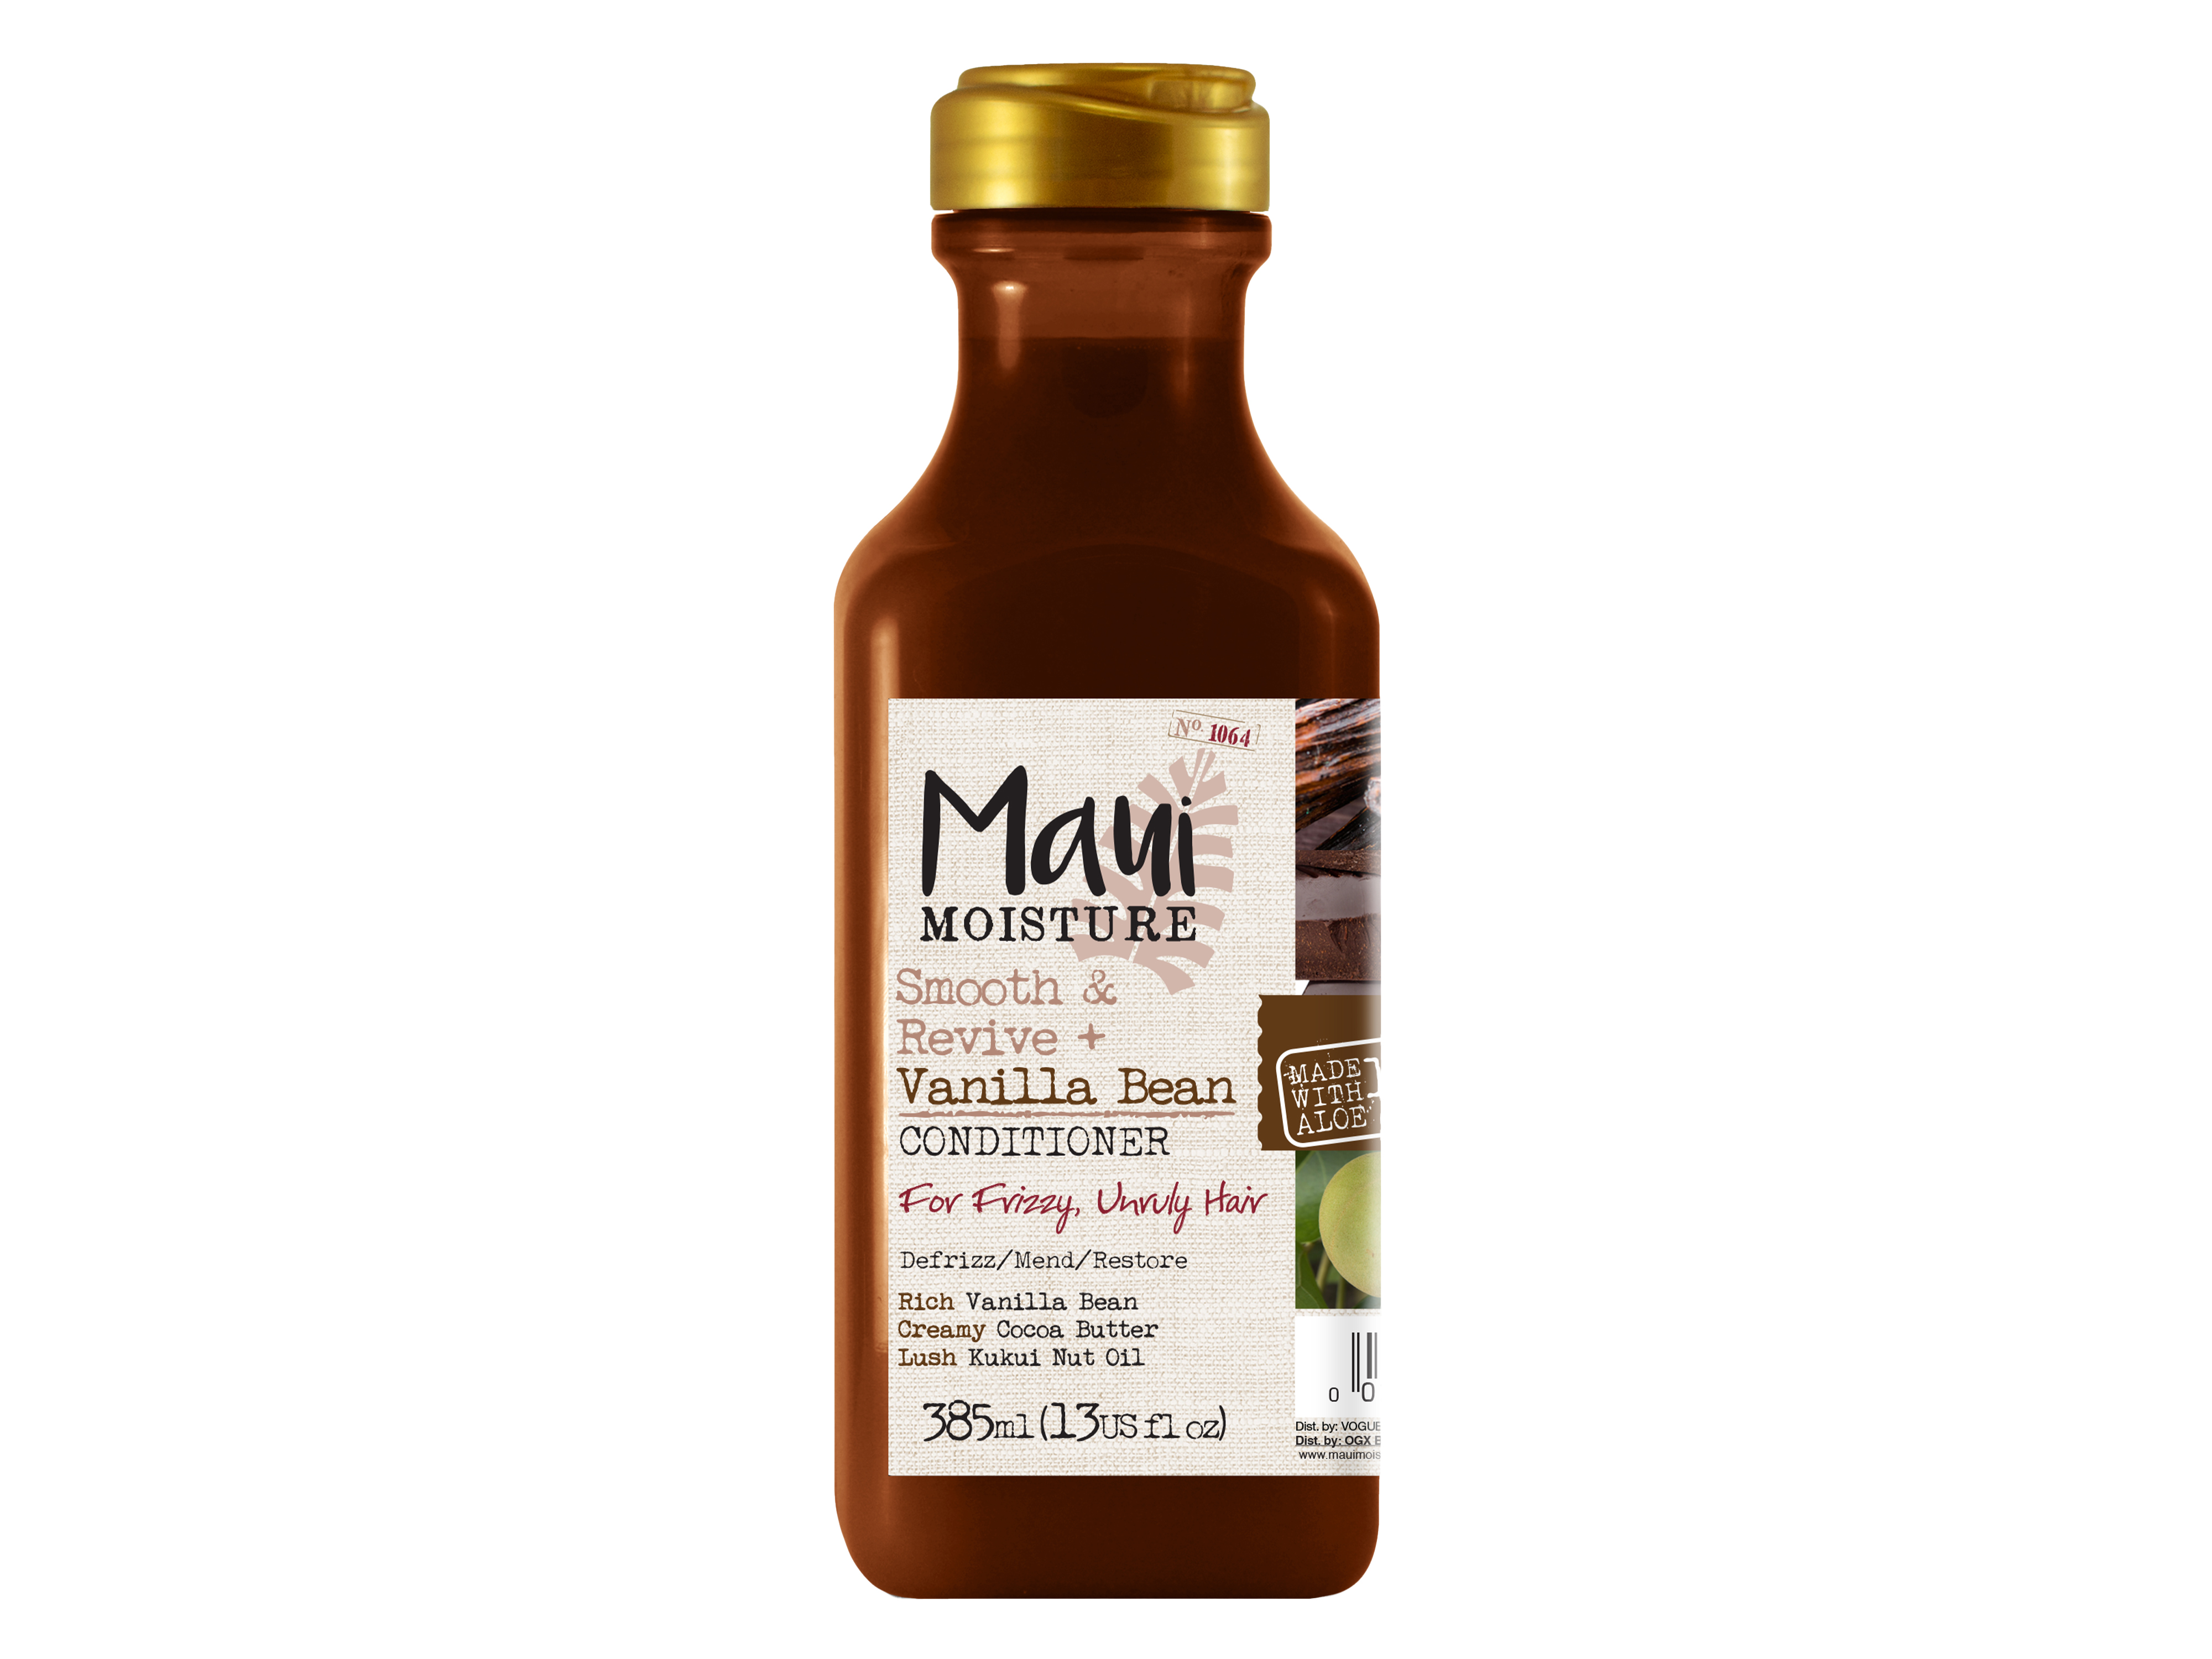 Maui Smooth & Revive + Vanilla Conditioner, 385 ml